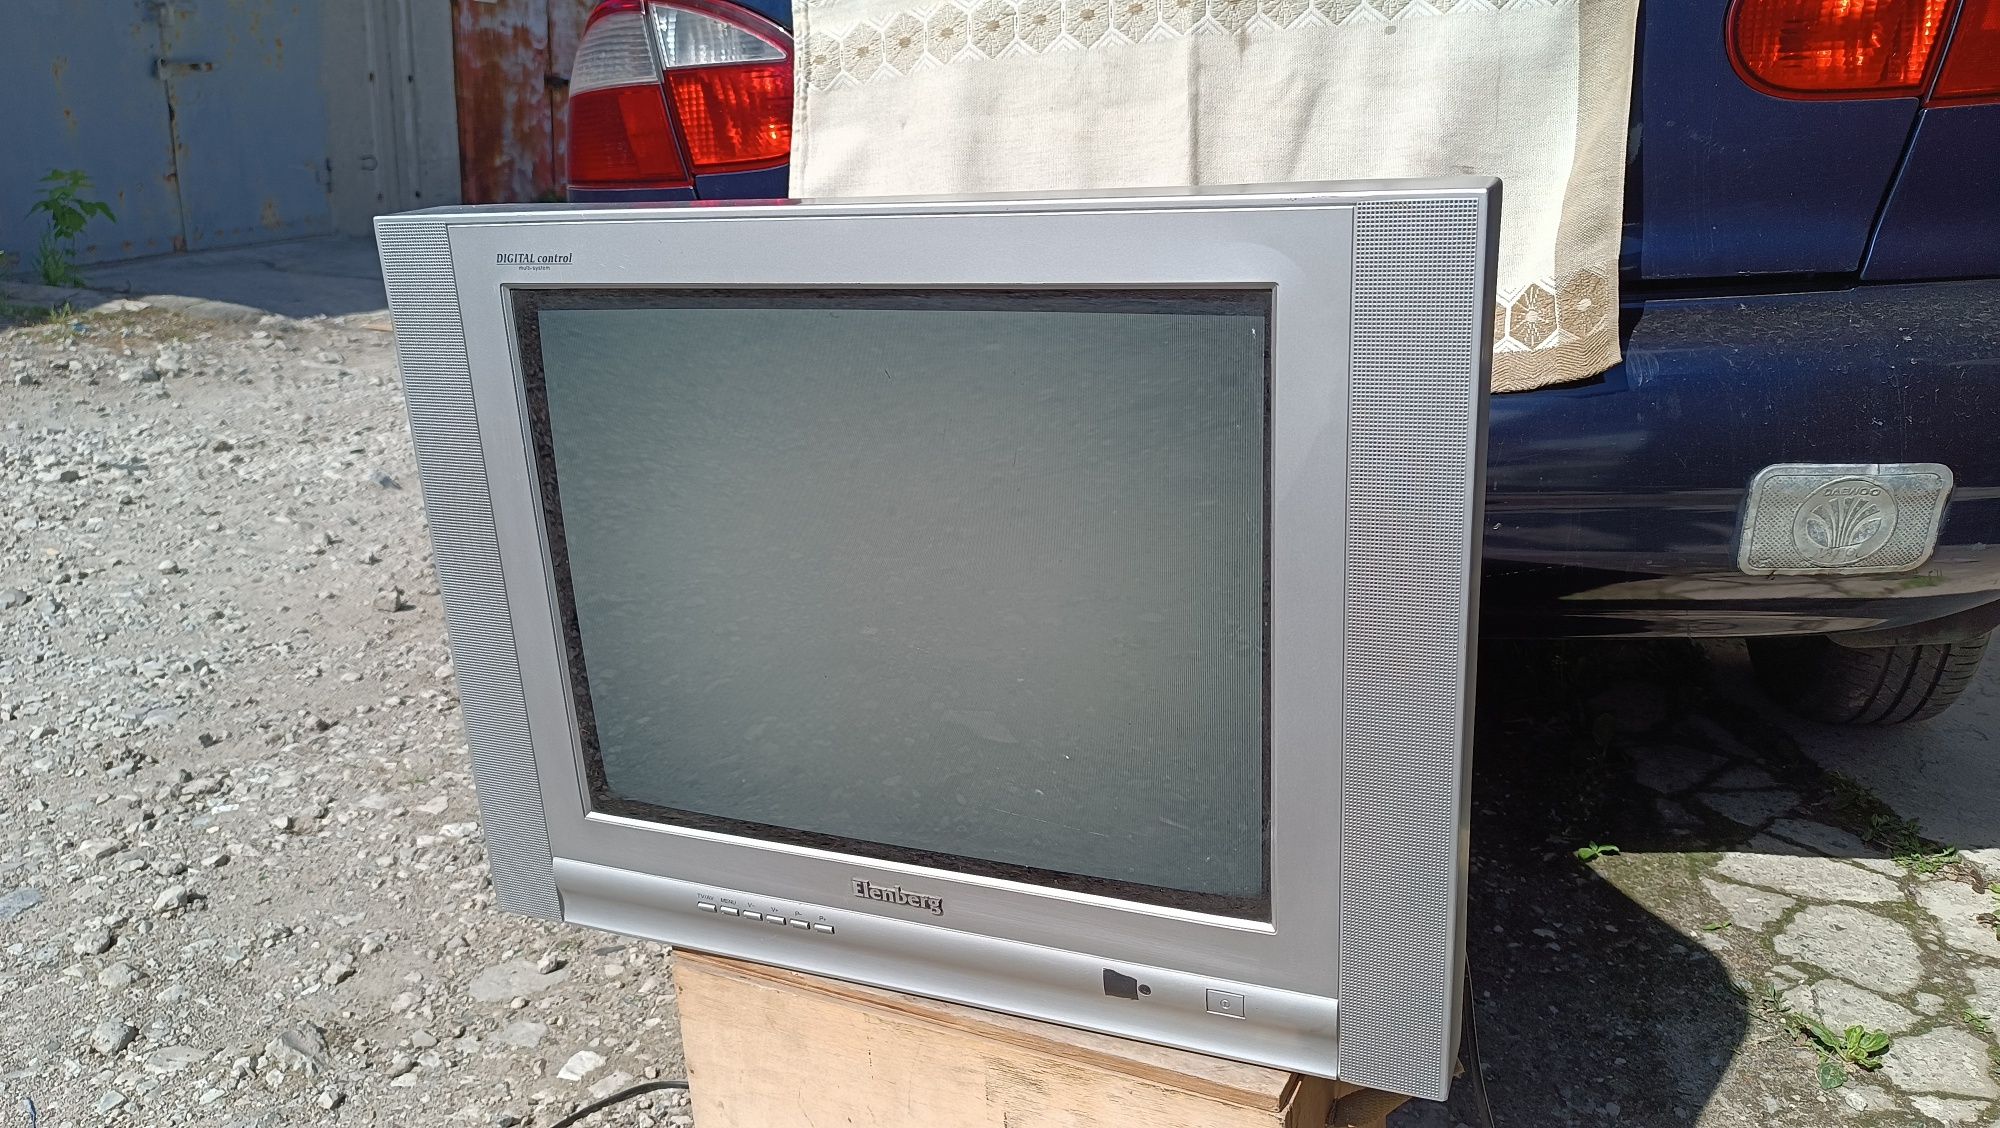 Продам телевизор Elenberg